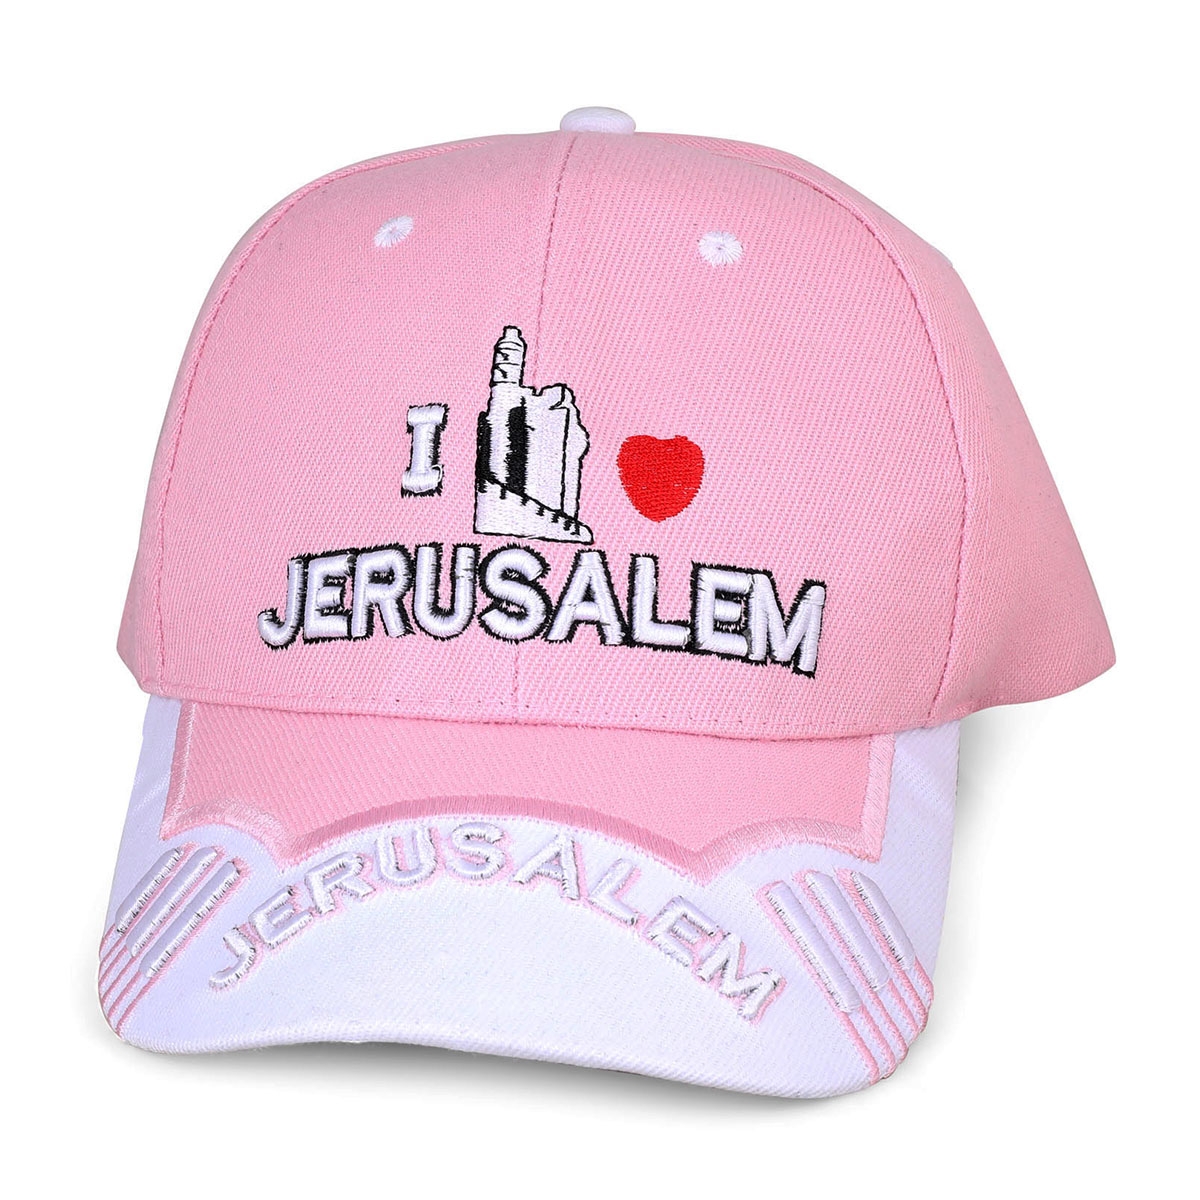 I Love Jerusalem Tower of David Baseball Cap - Pink - 1